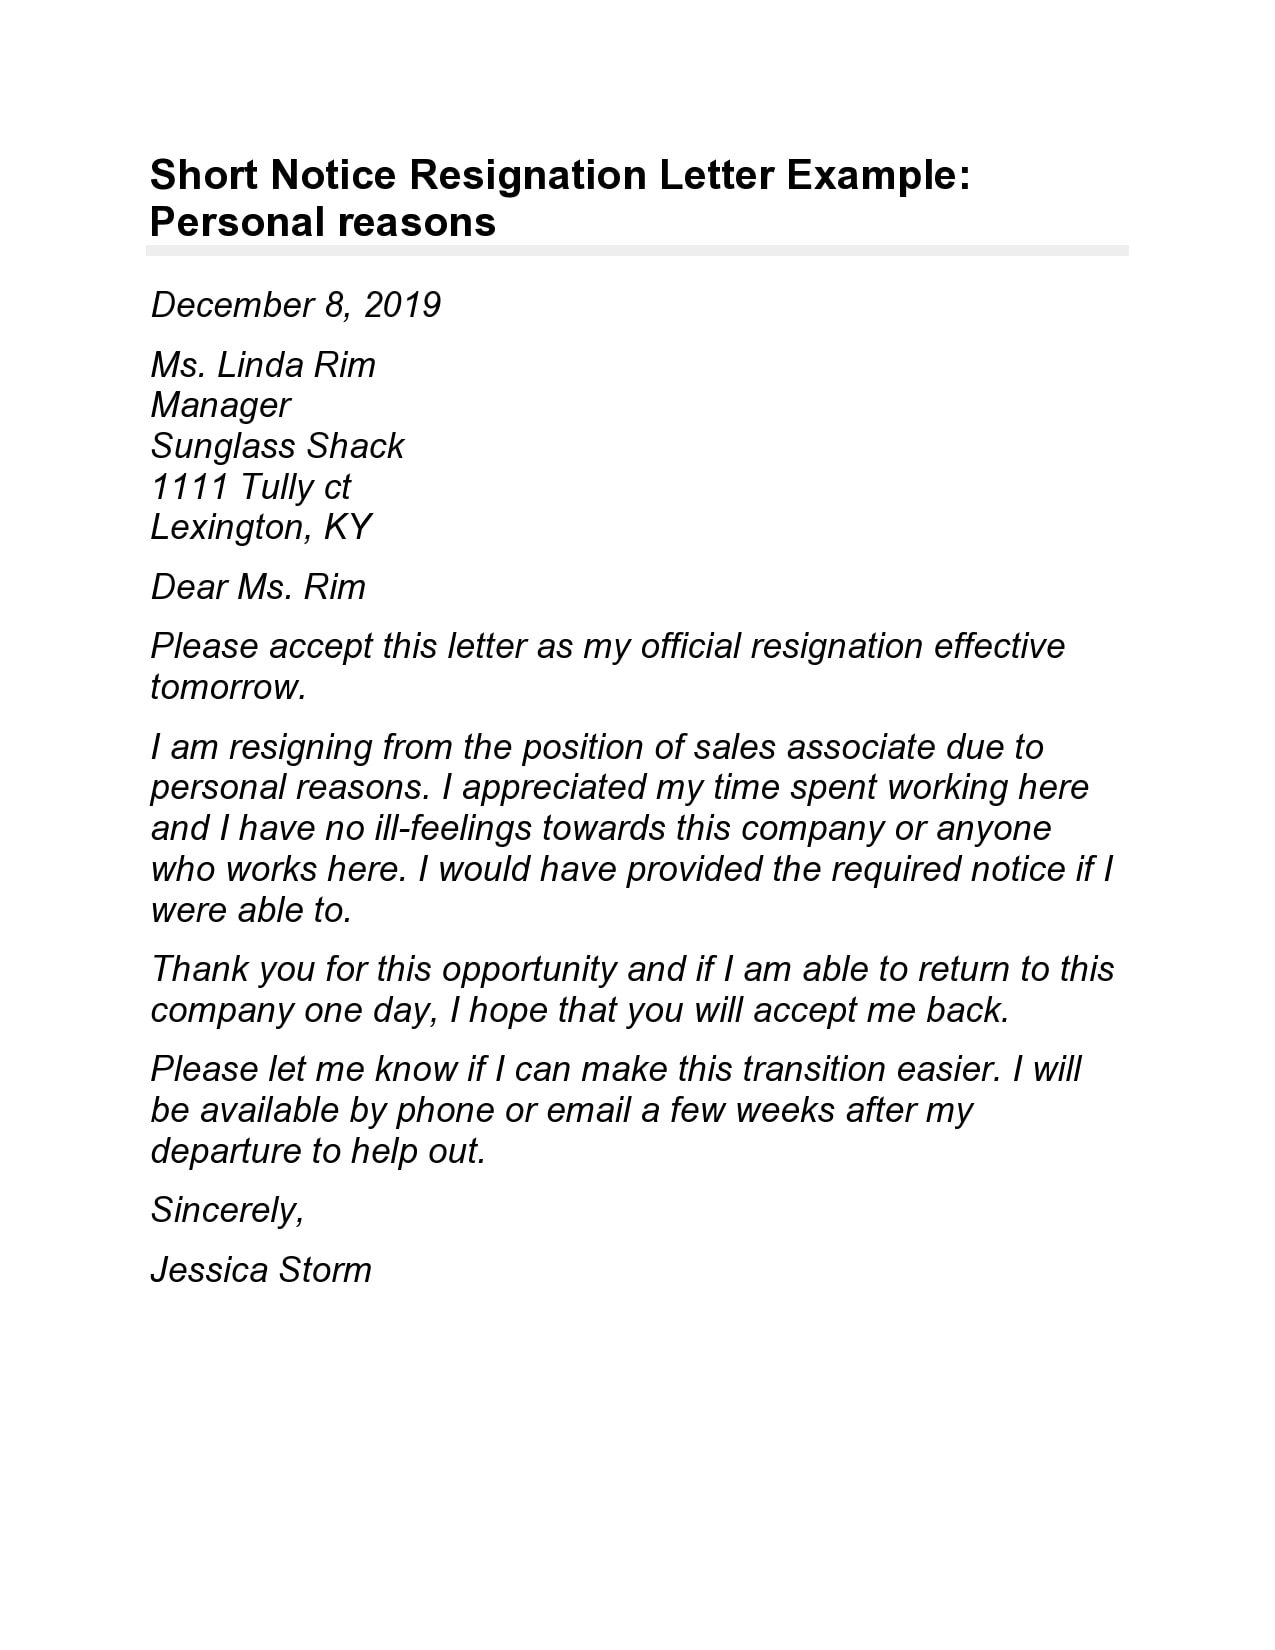 Short Notice Resignation Letter 18 